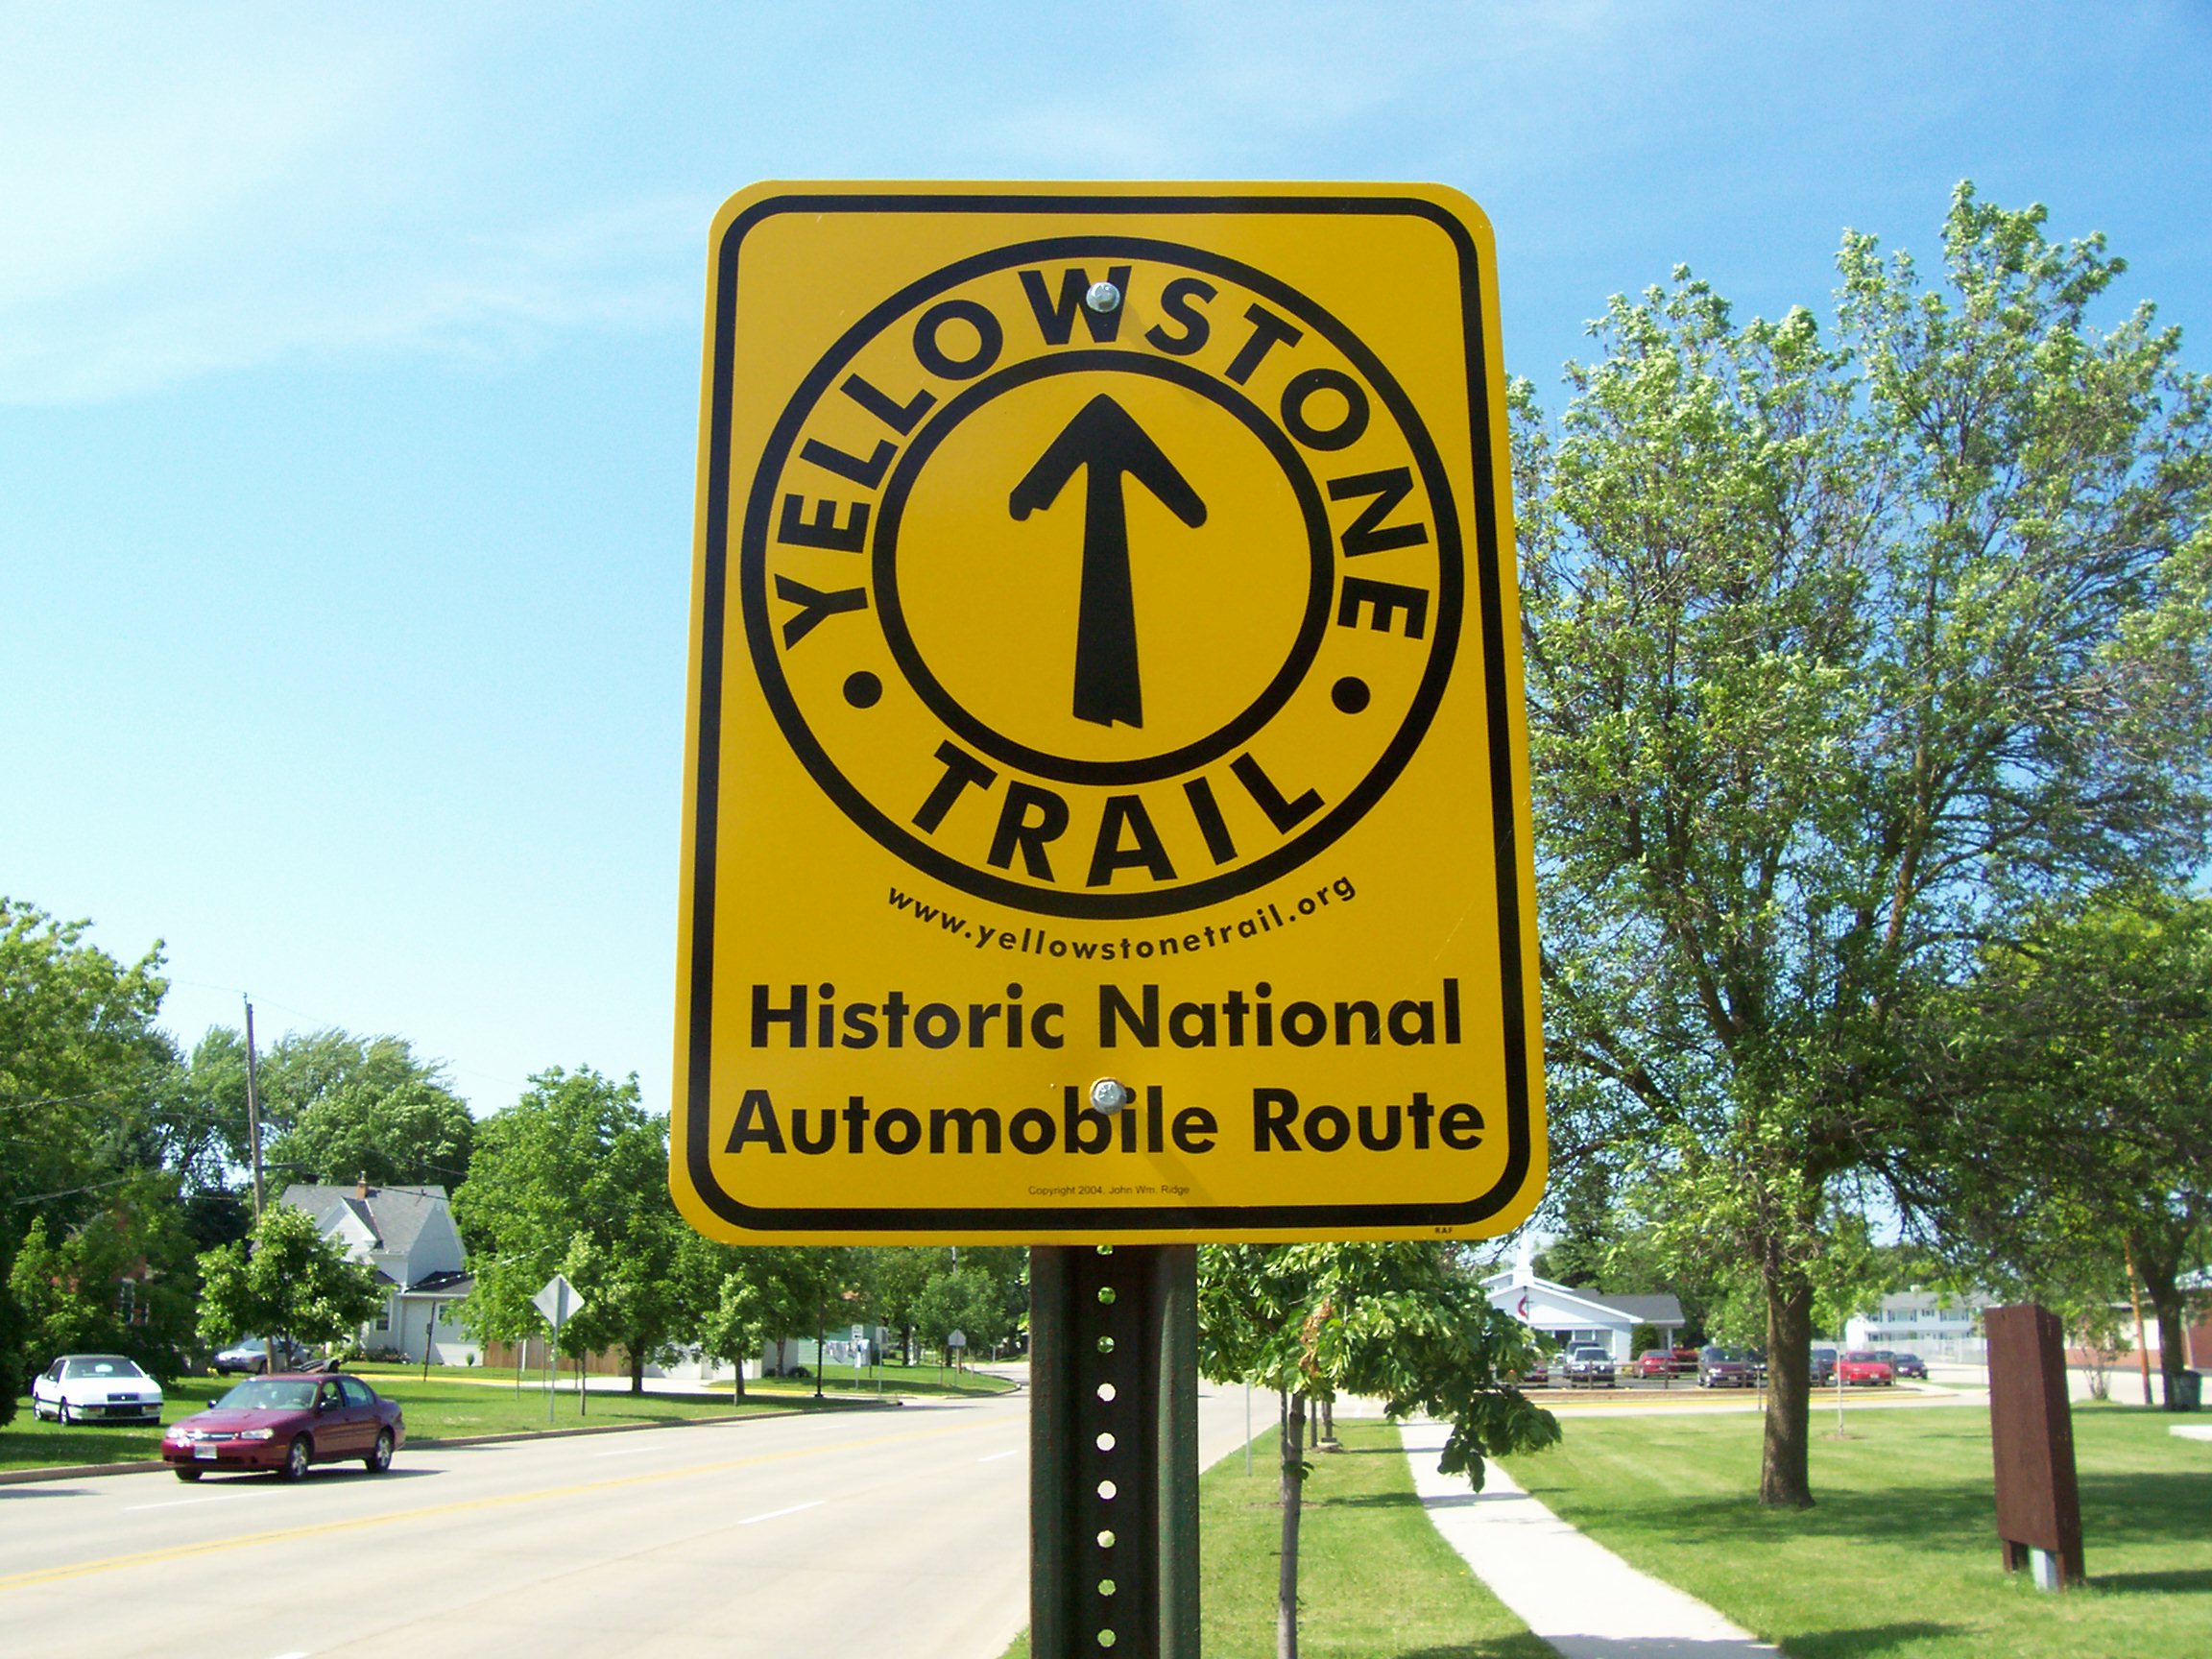 Yellowstone trail sign